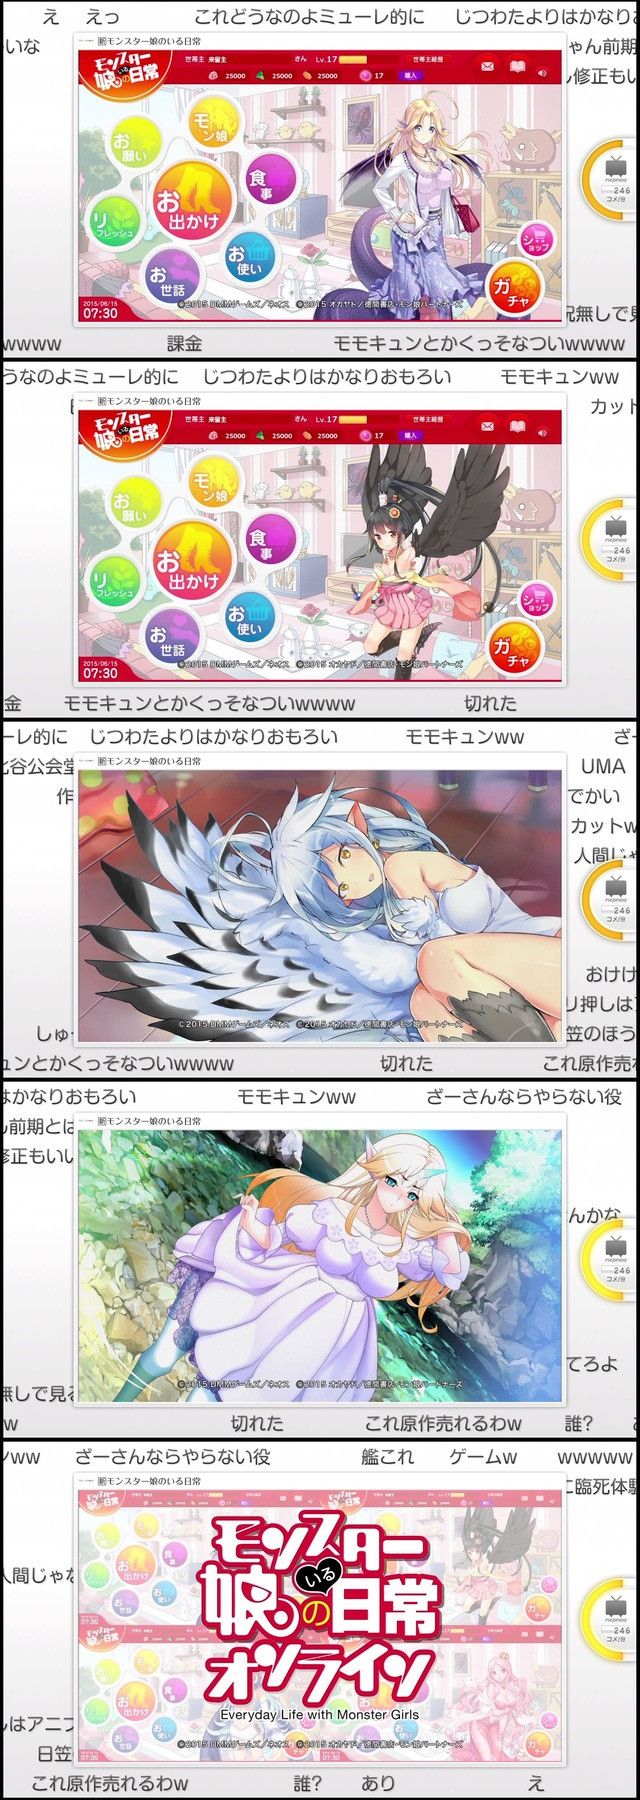 Monster Musume Browser Game Screenshots 11